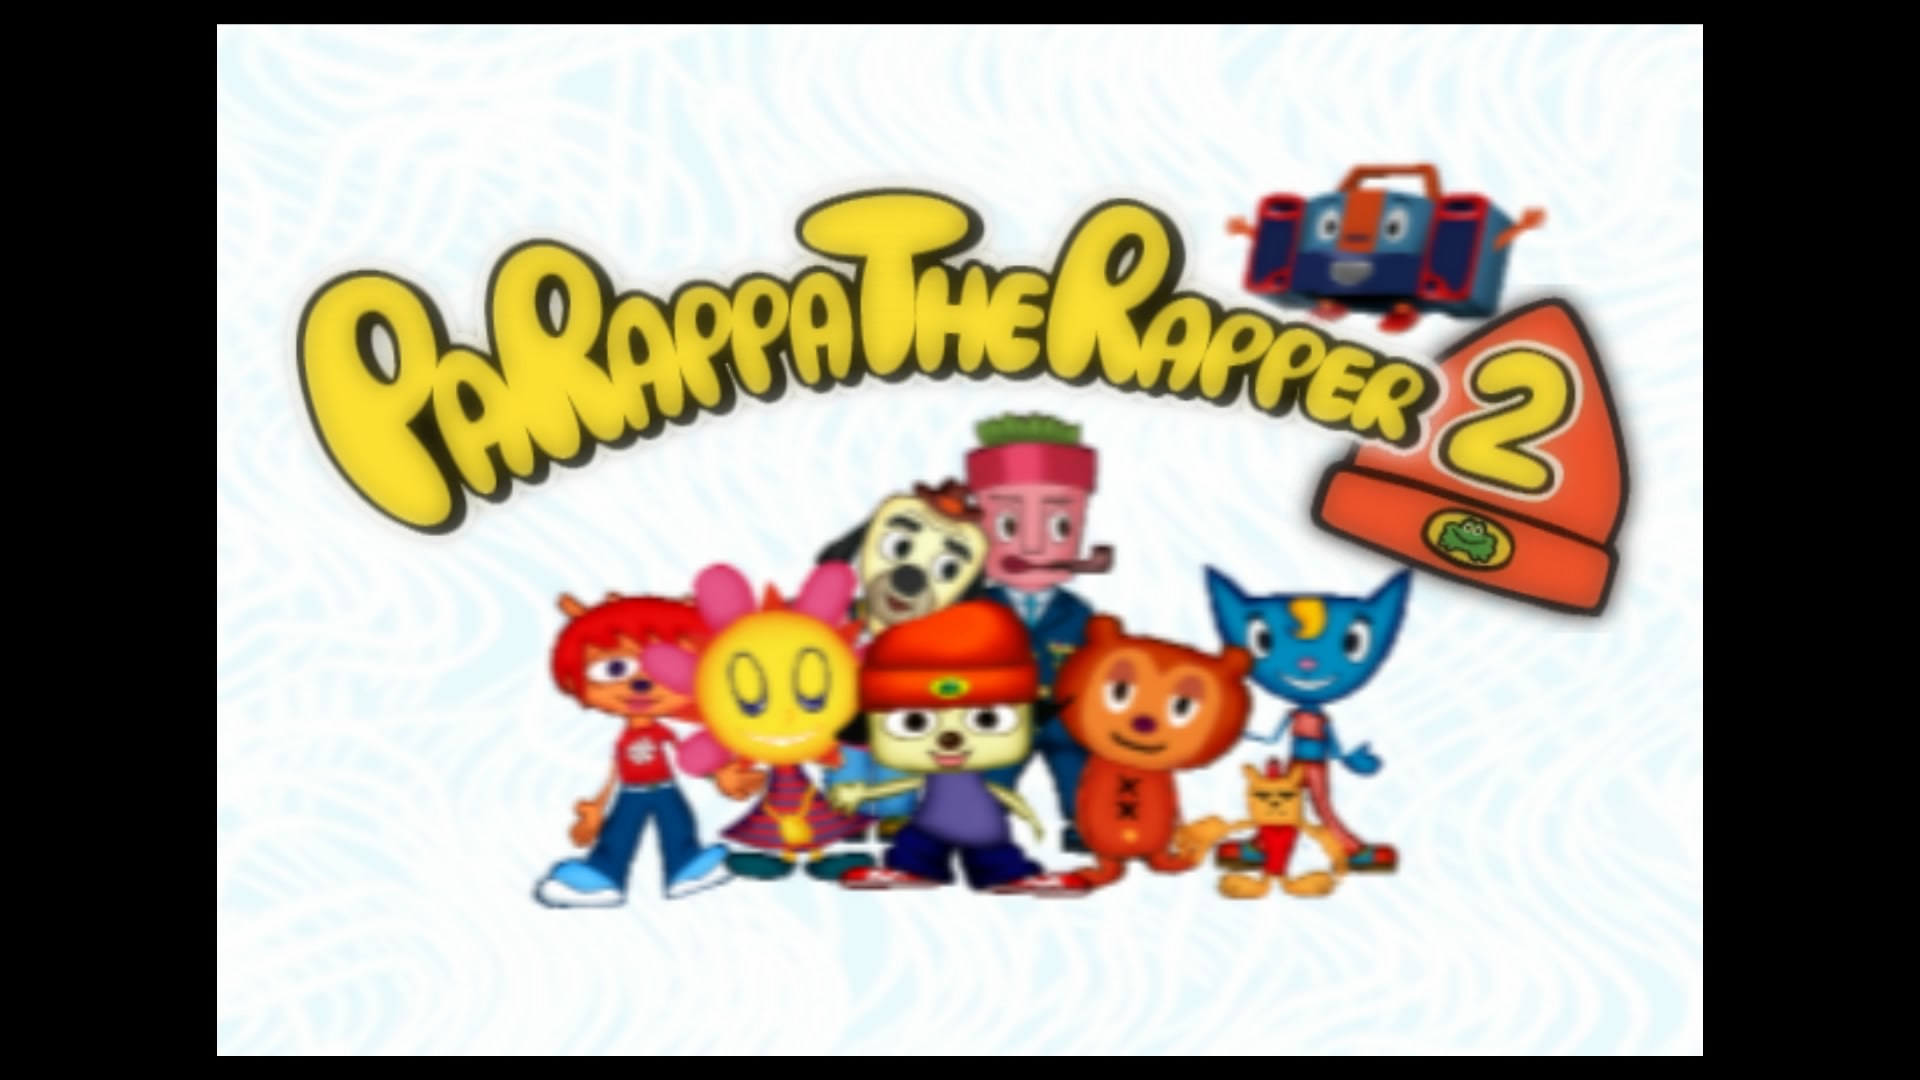 PlayStation 2 - PaRappa the Rapper 2 - PaRappa (Alaskan) - The